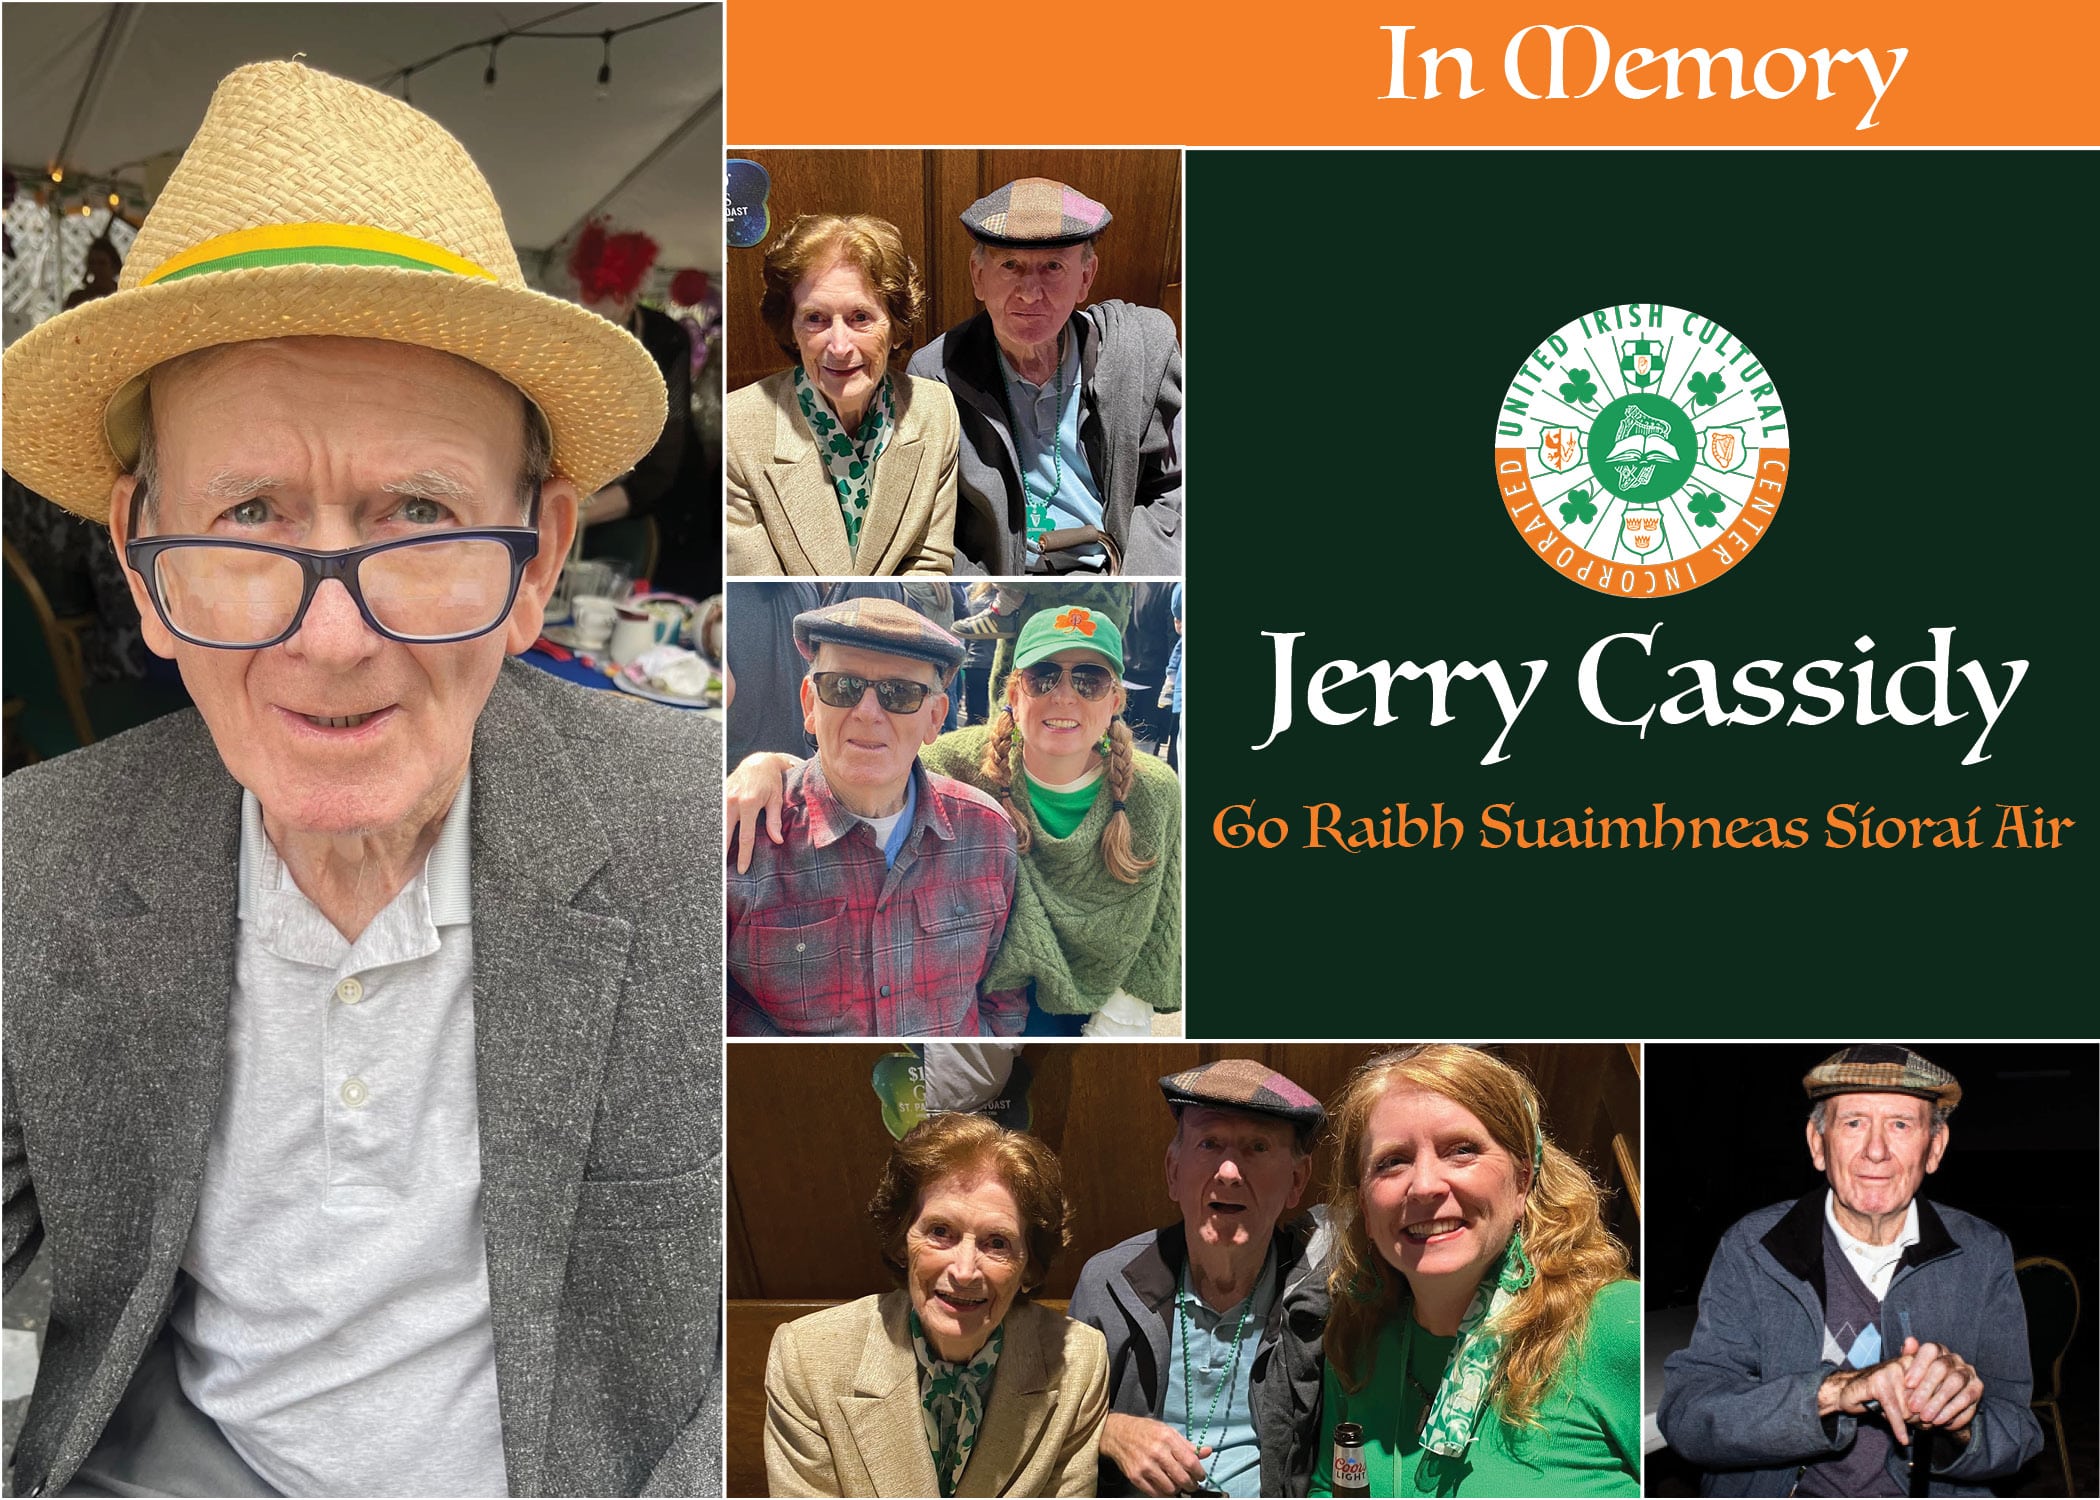 Jerry Cassidy